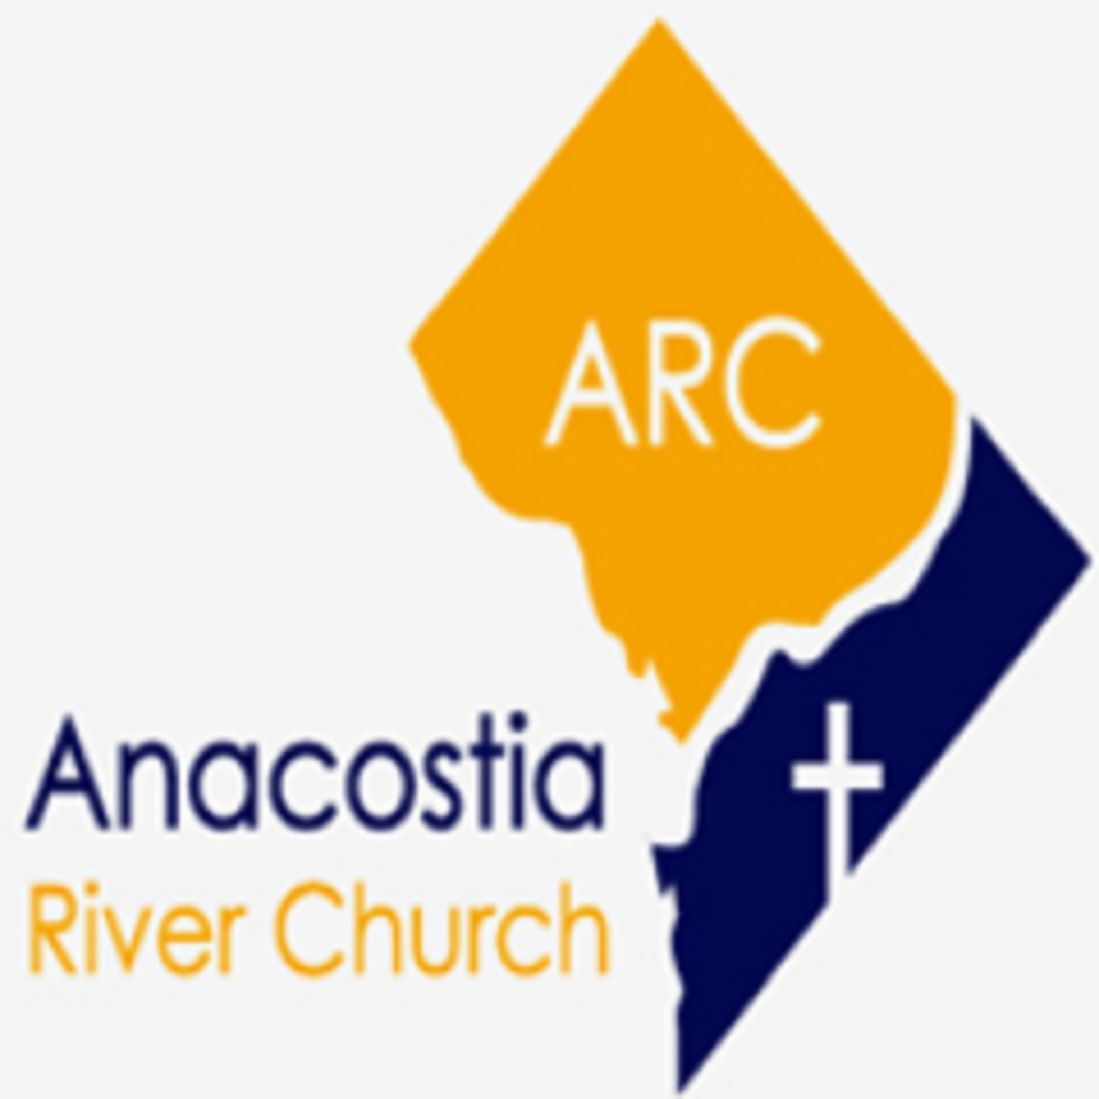 Anacostia River Church